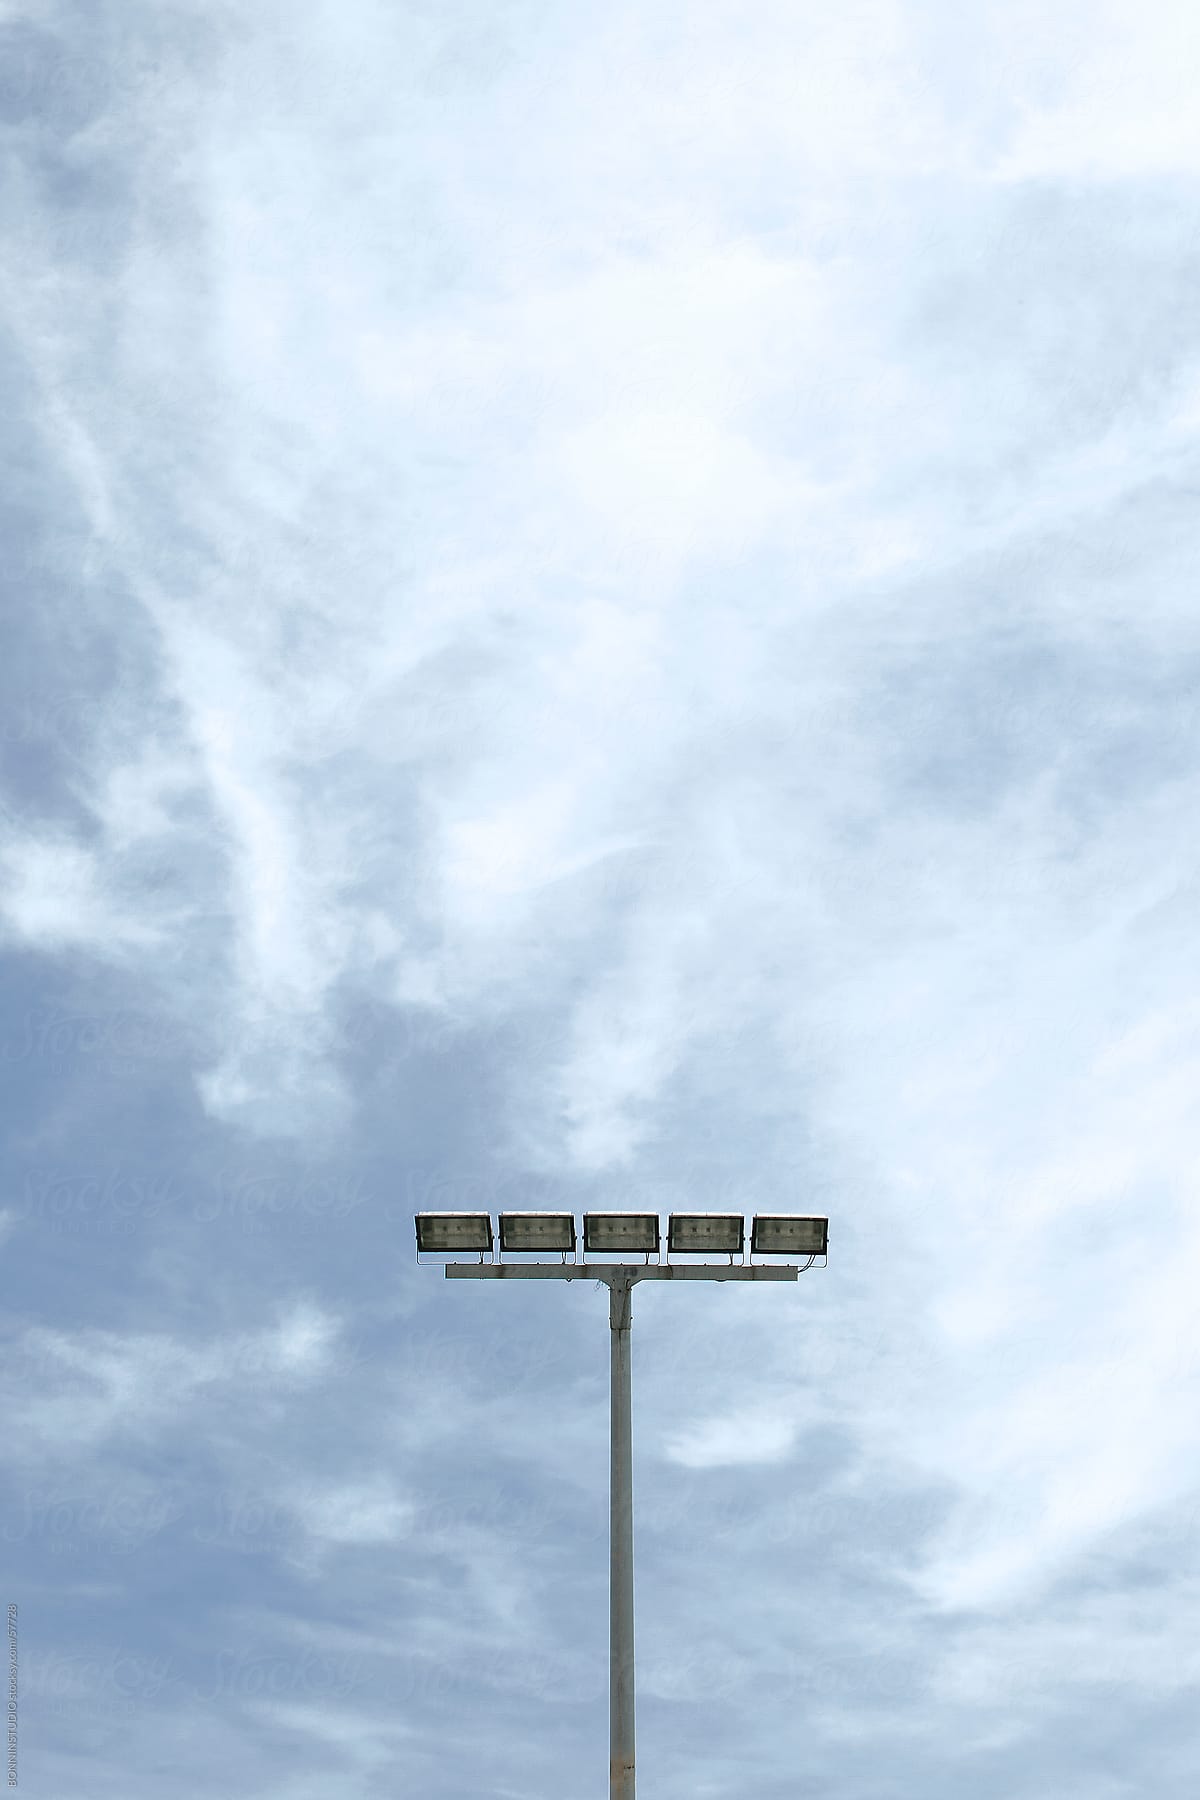 Stadium light over cloudy sky.